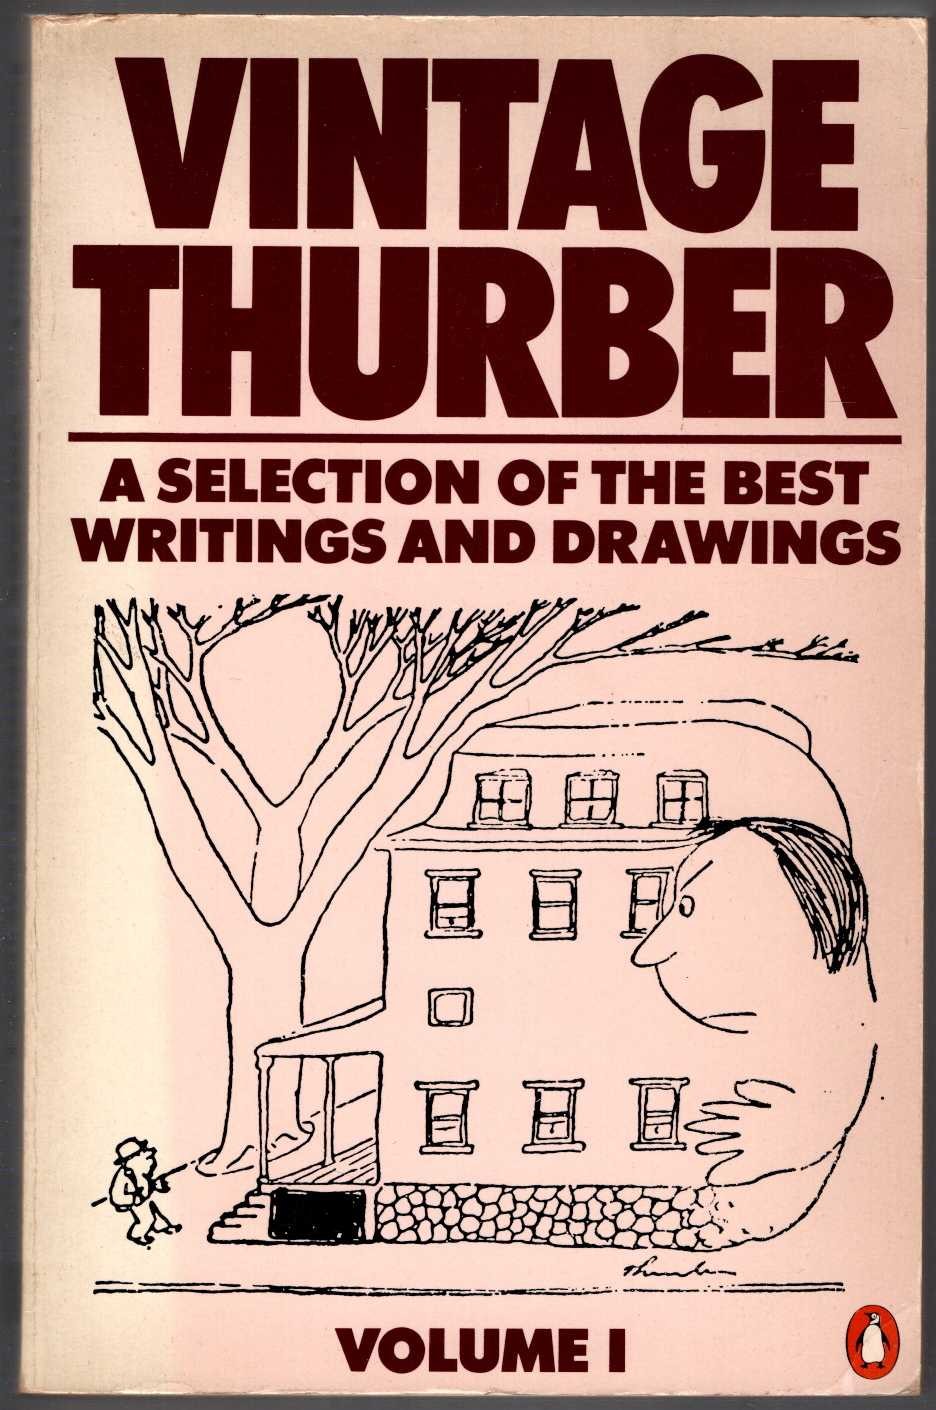 James Thurber (Illus.) VINTAGE THURBER Volume 1 front book cover image